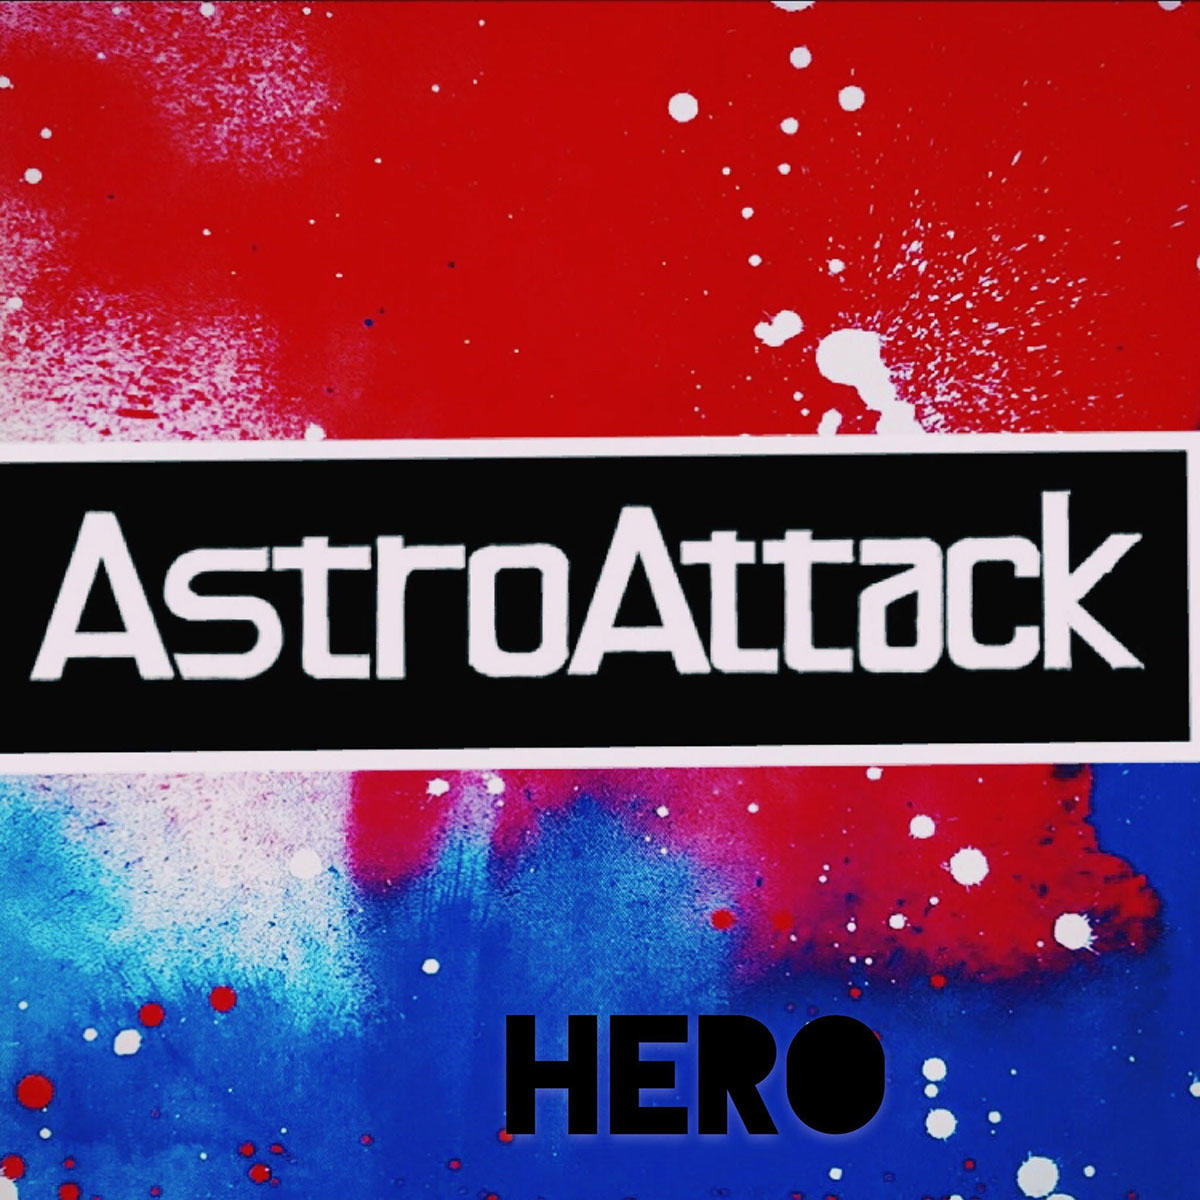 Astroattack_jk_hero_1200_20200716.jpg